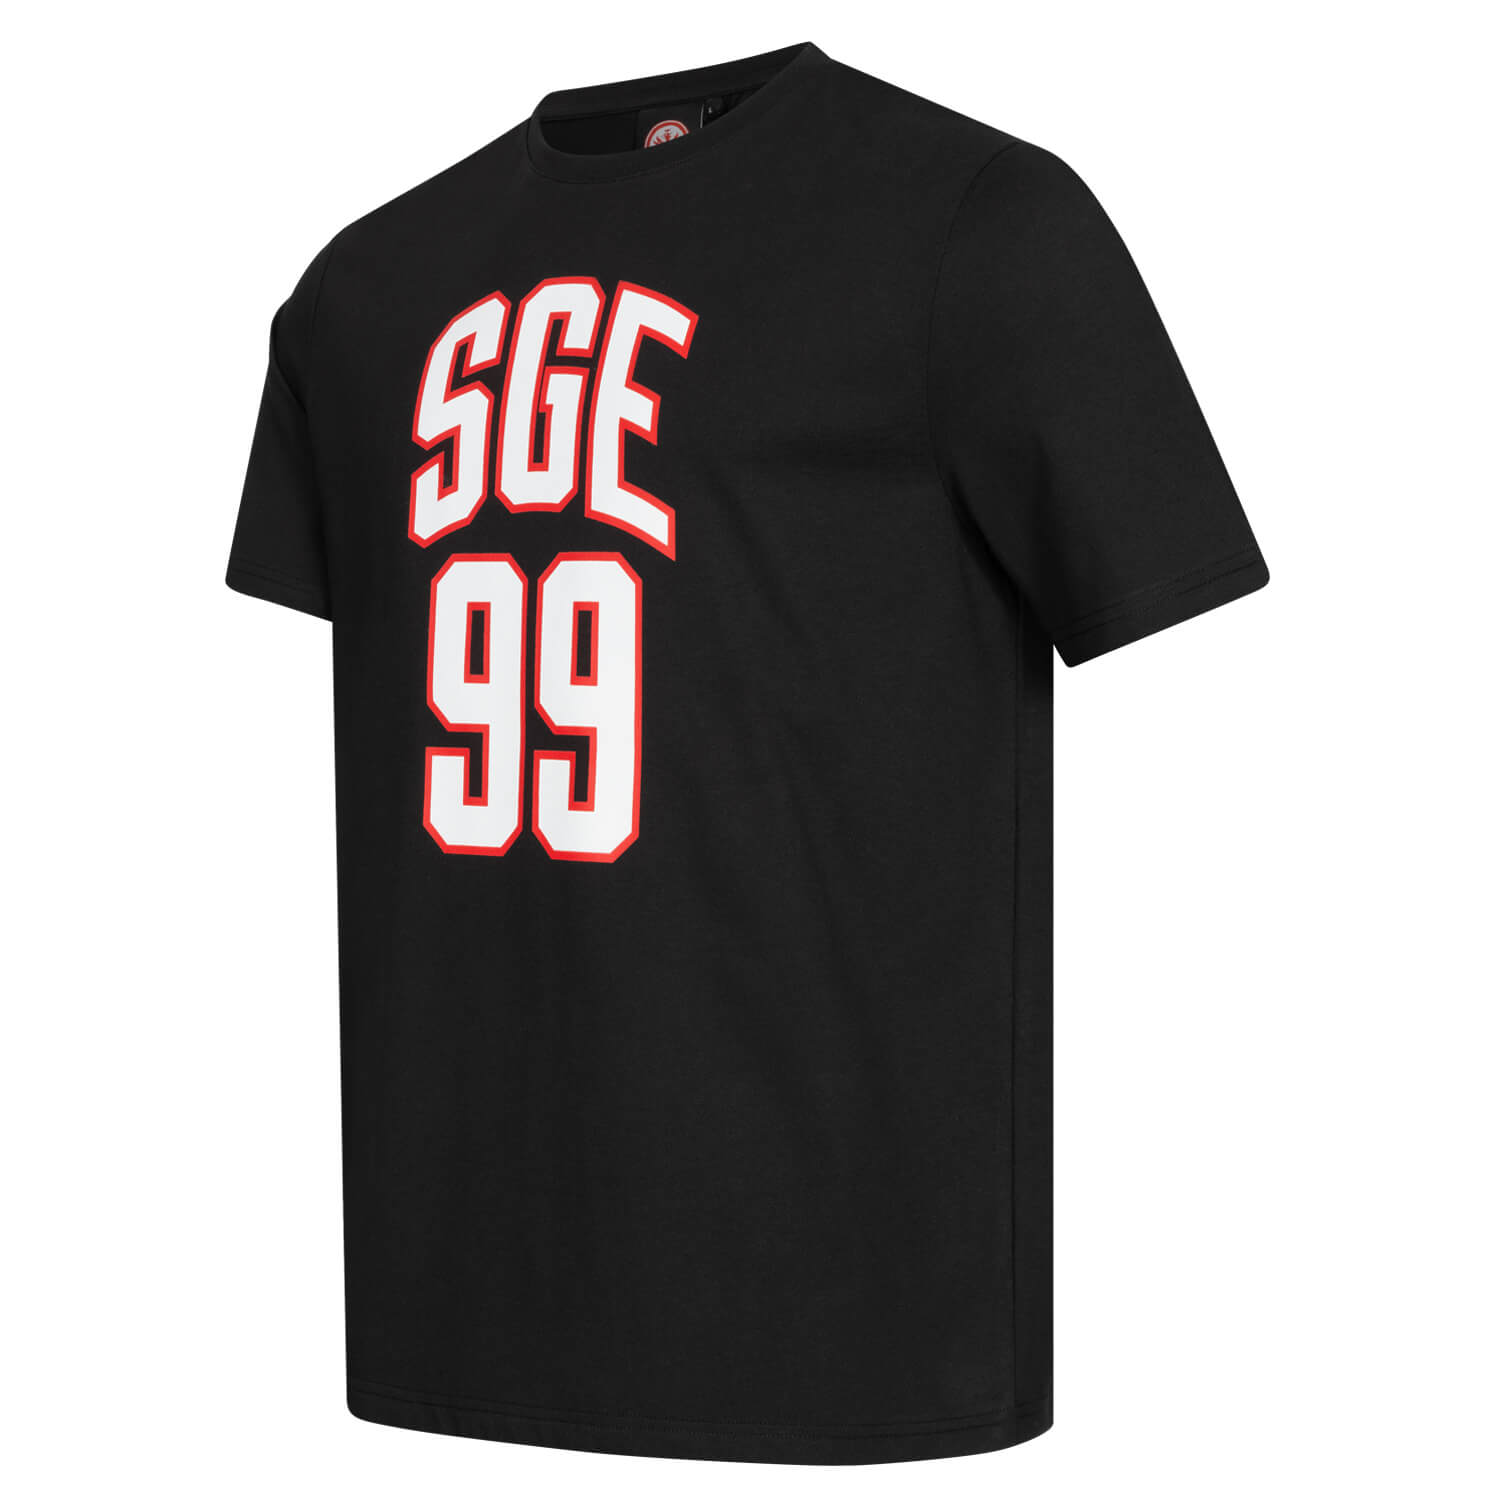 Bild 3: T-Shirt SGE 99